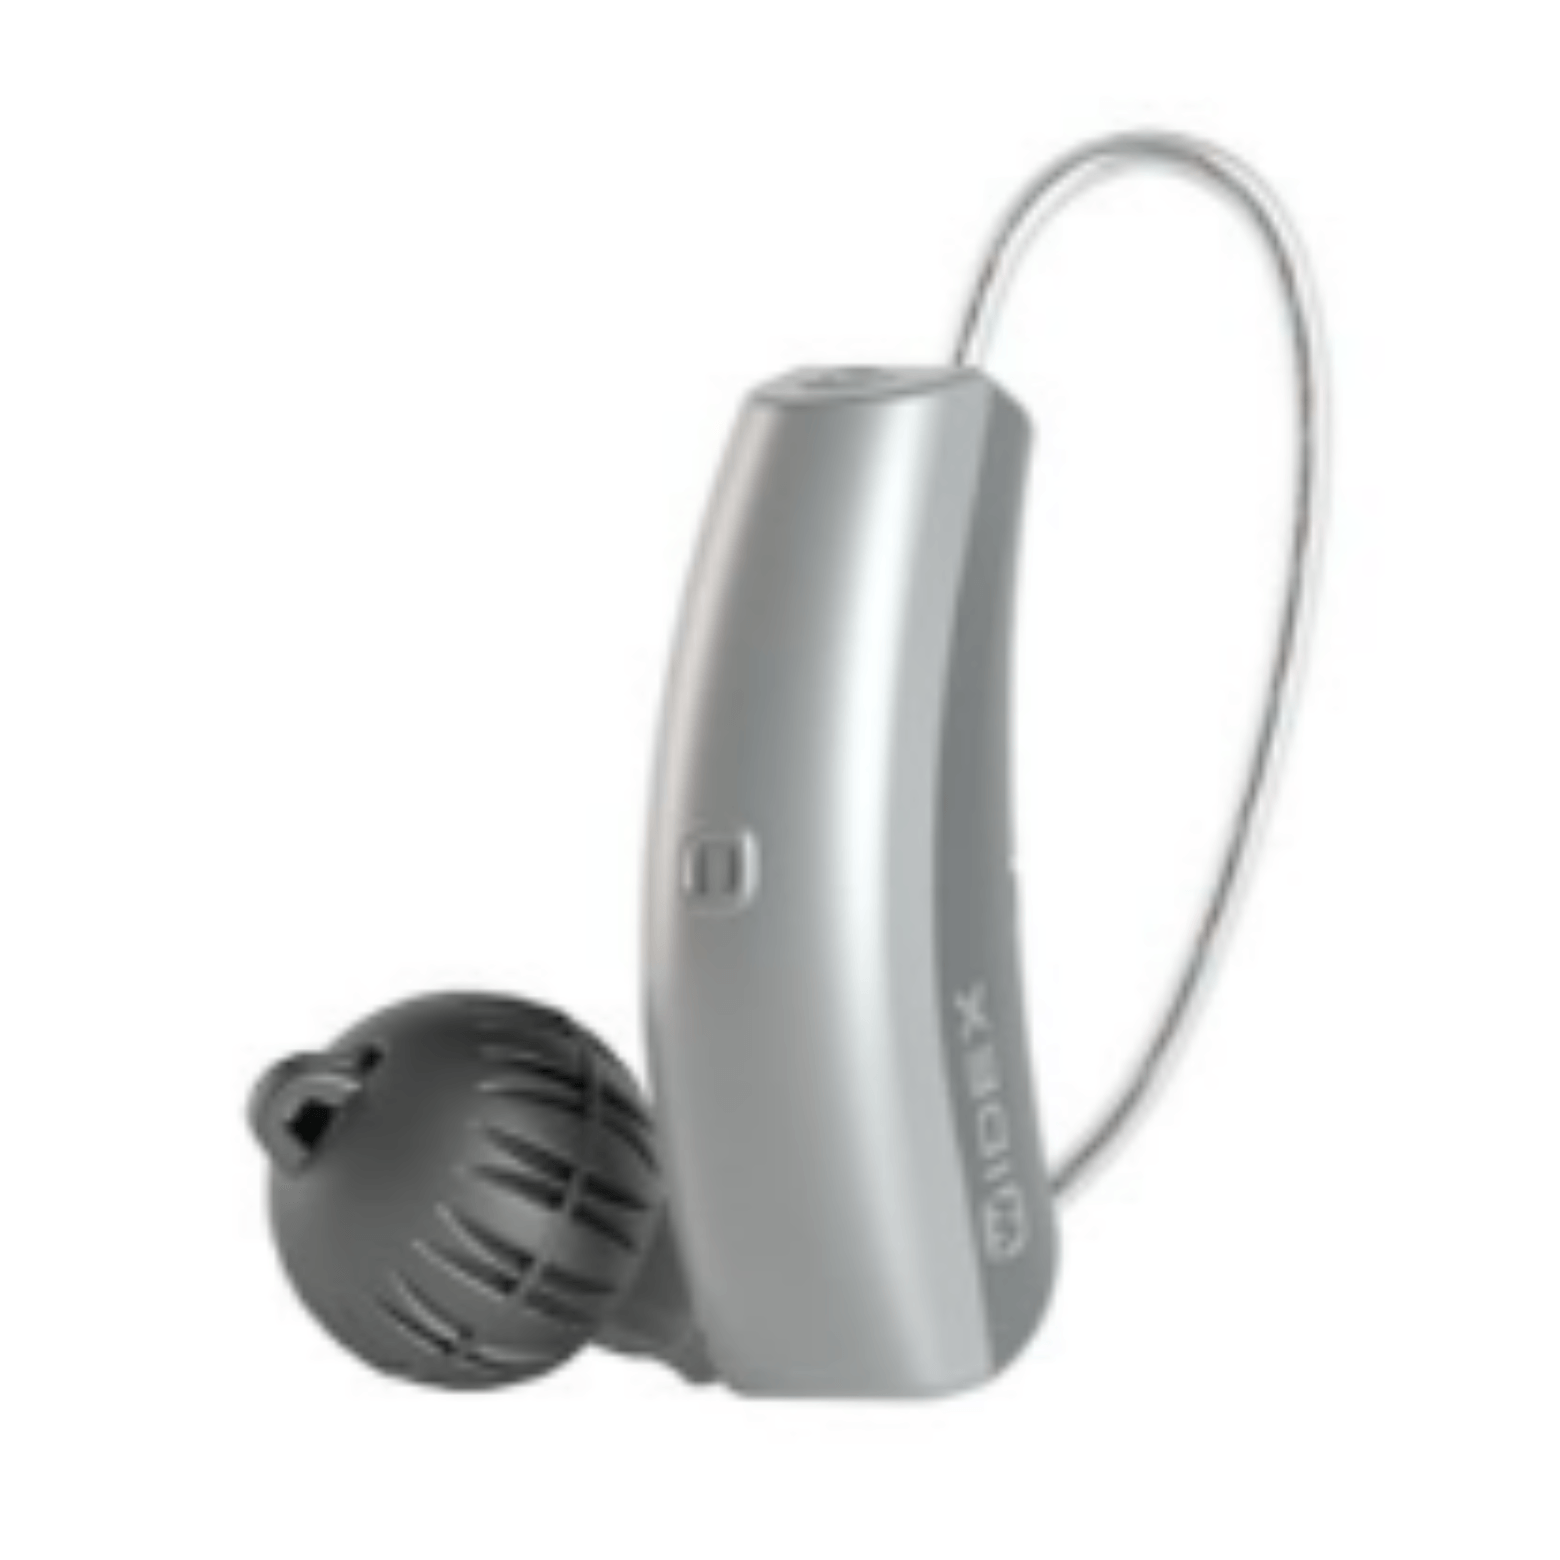 HdO-Hörgeräte mit externem Hörer Beispiel